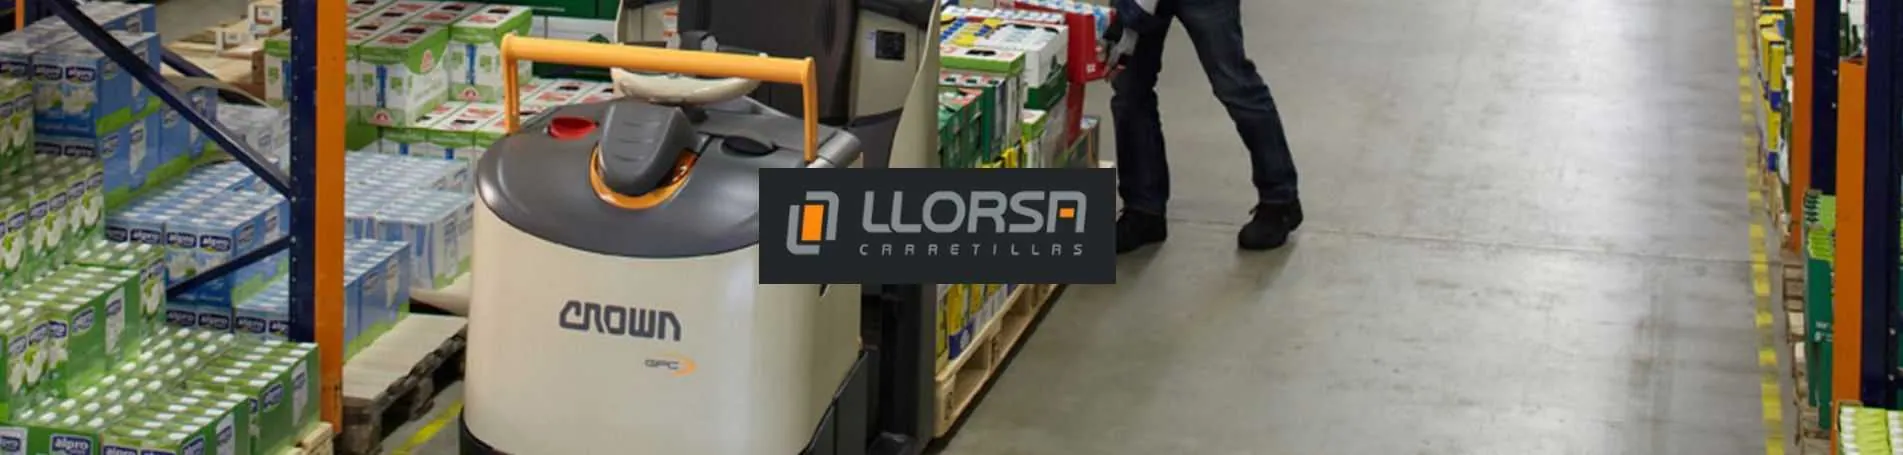 Online Marketing Outsourcing para Llorsa